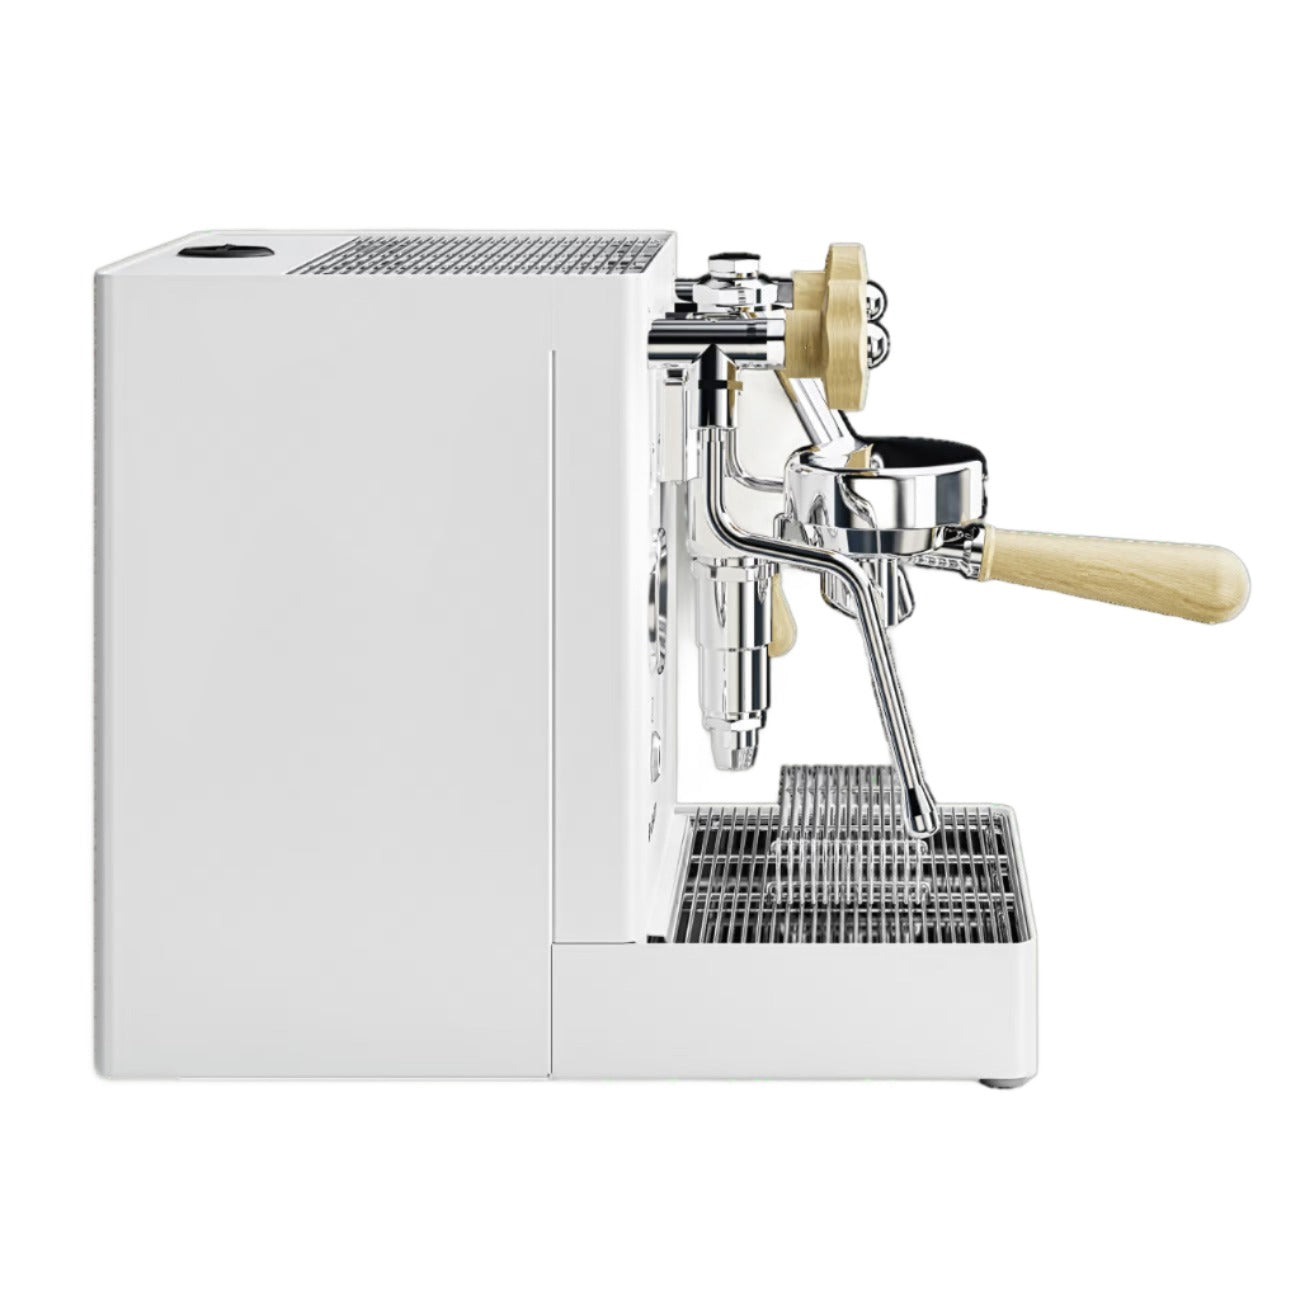 marax-hx-boiler-coffee-machine-white-side-view